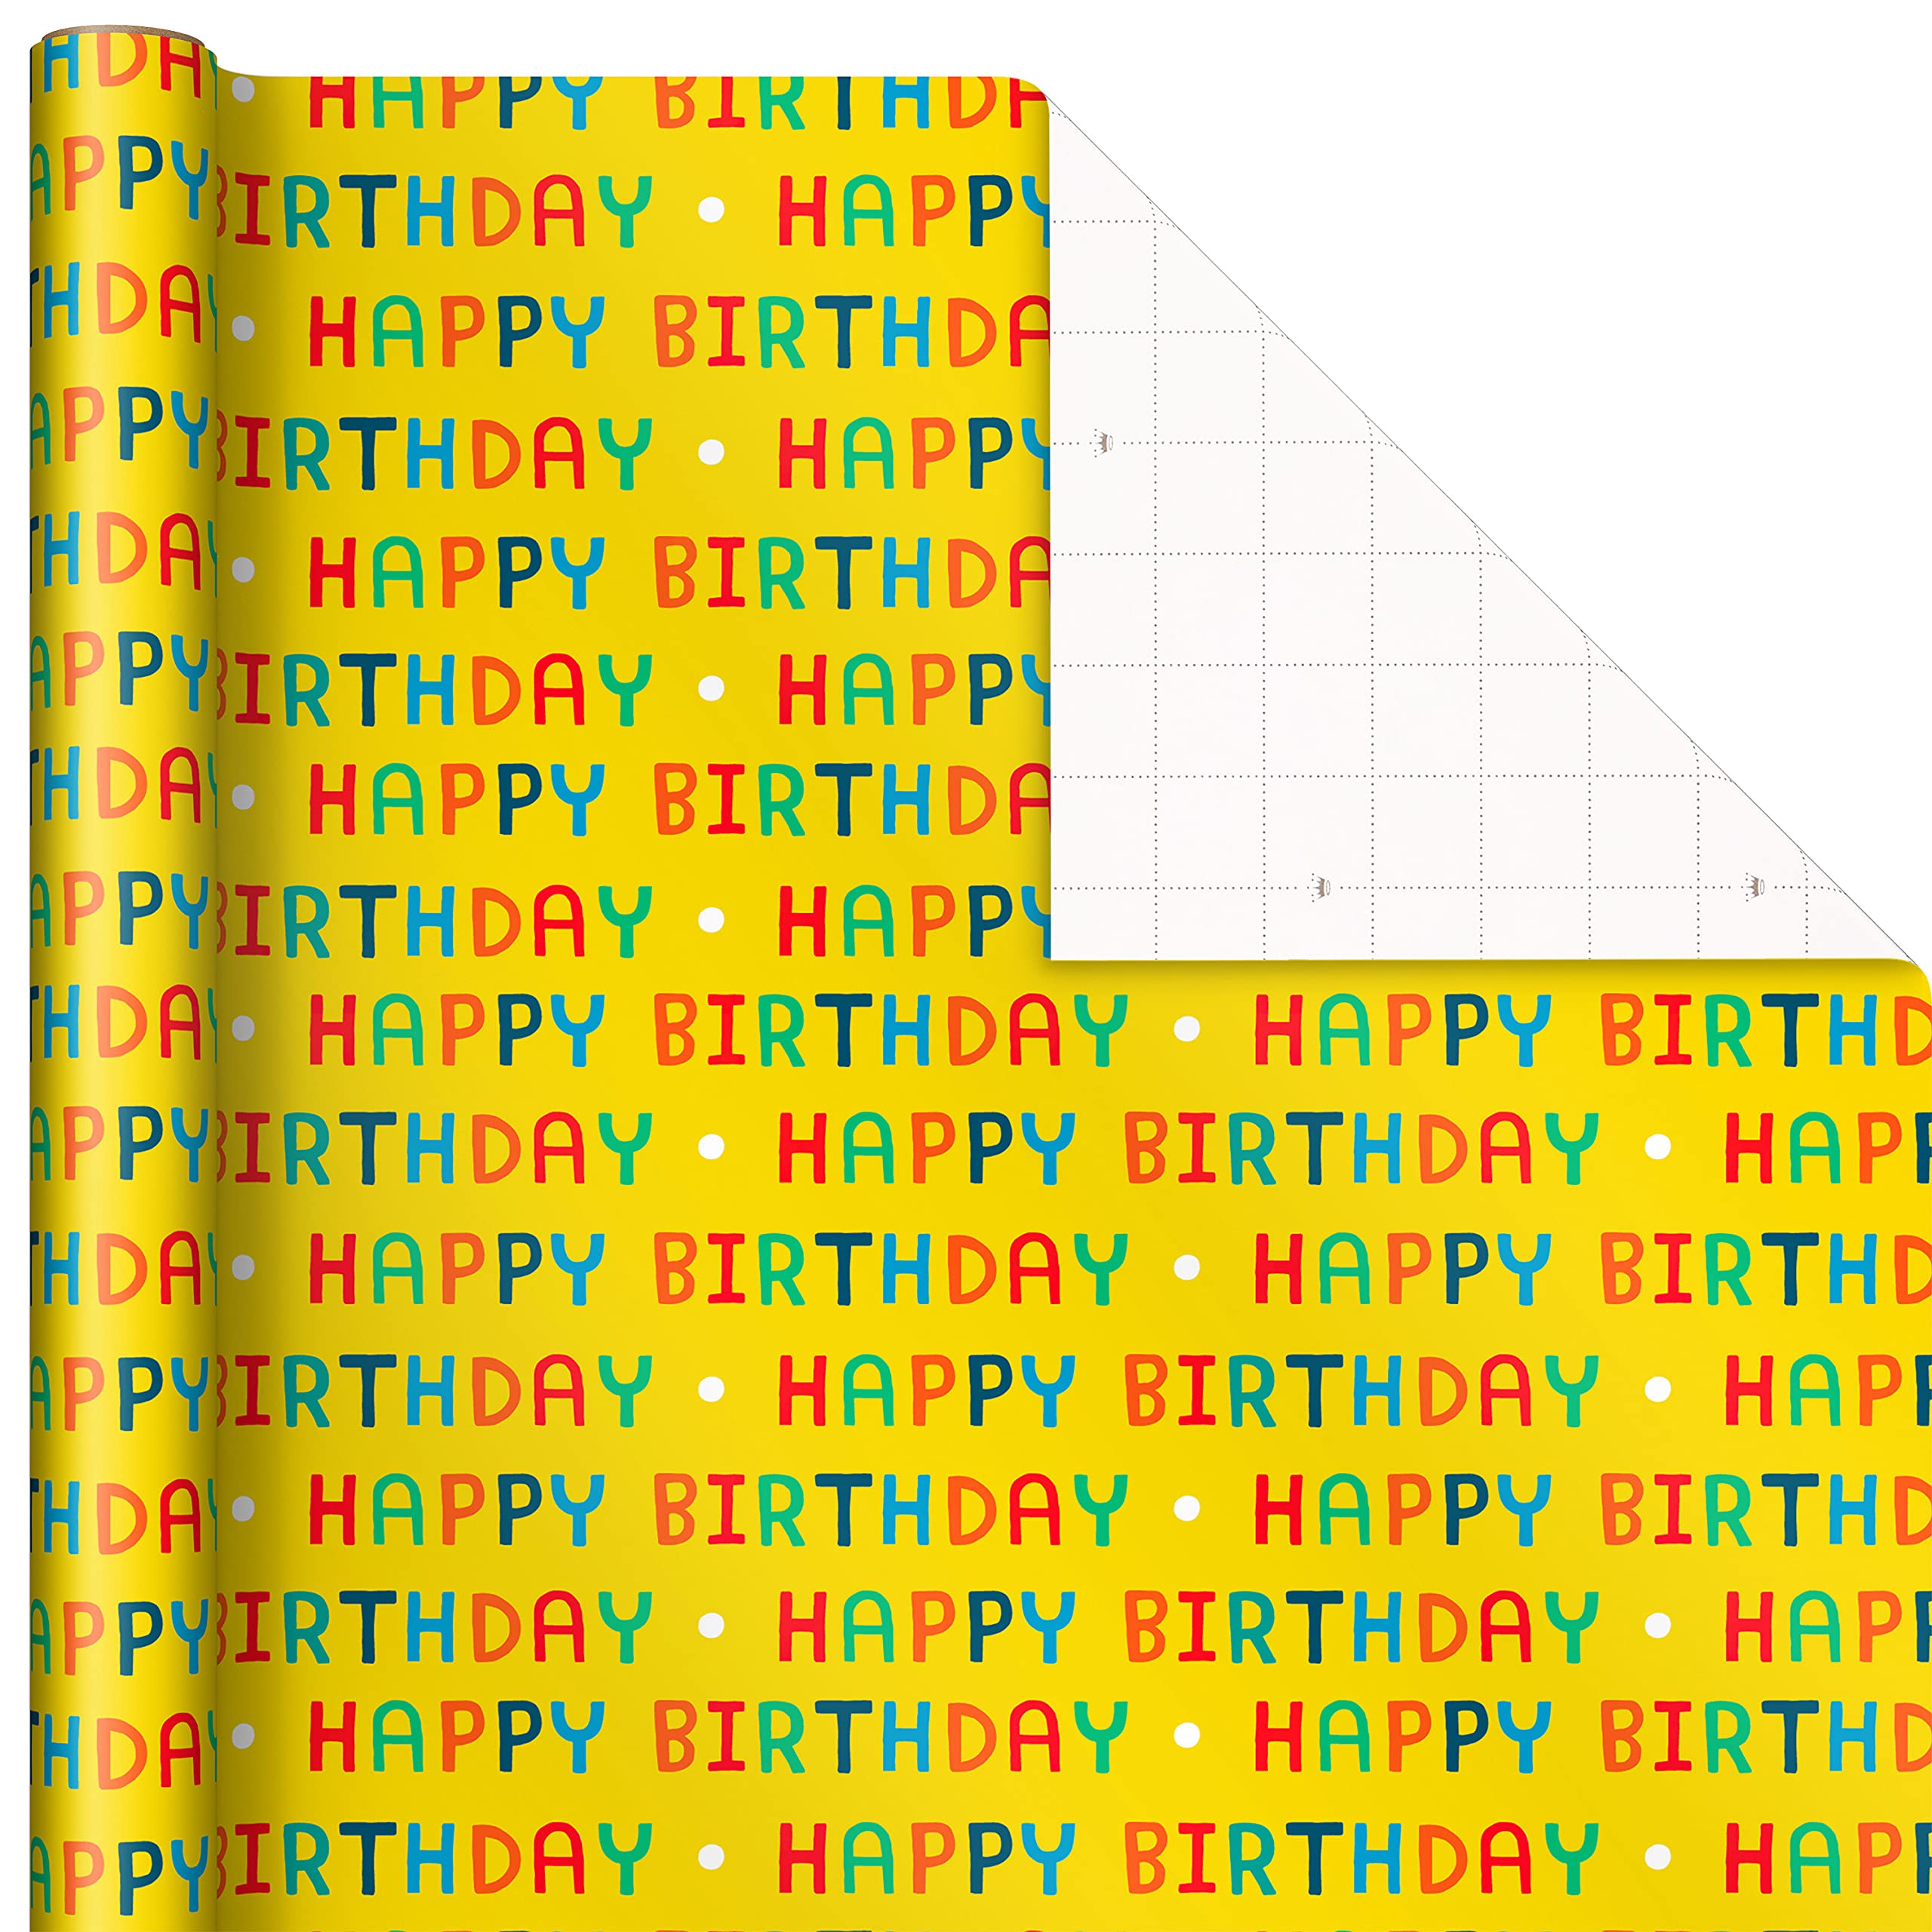 Hallmark Kids Birthday Wrapping Paper (3 Rolls: 75 sq. ft. ttl) Pink Rainbows, Blue Dinosaurs, Yellow 